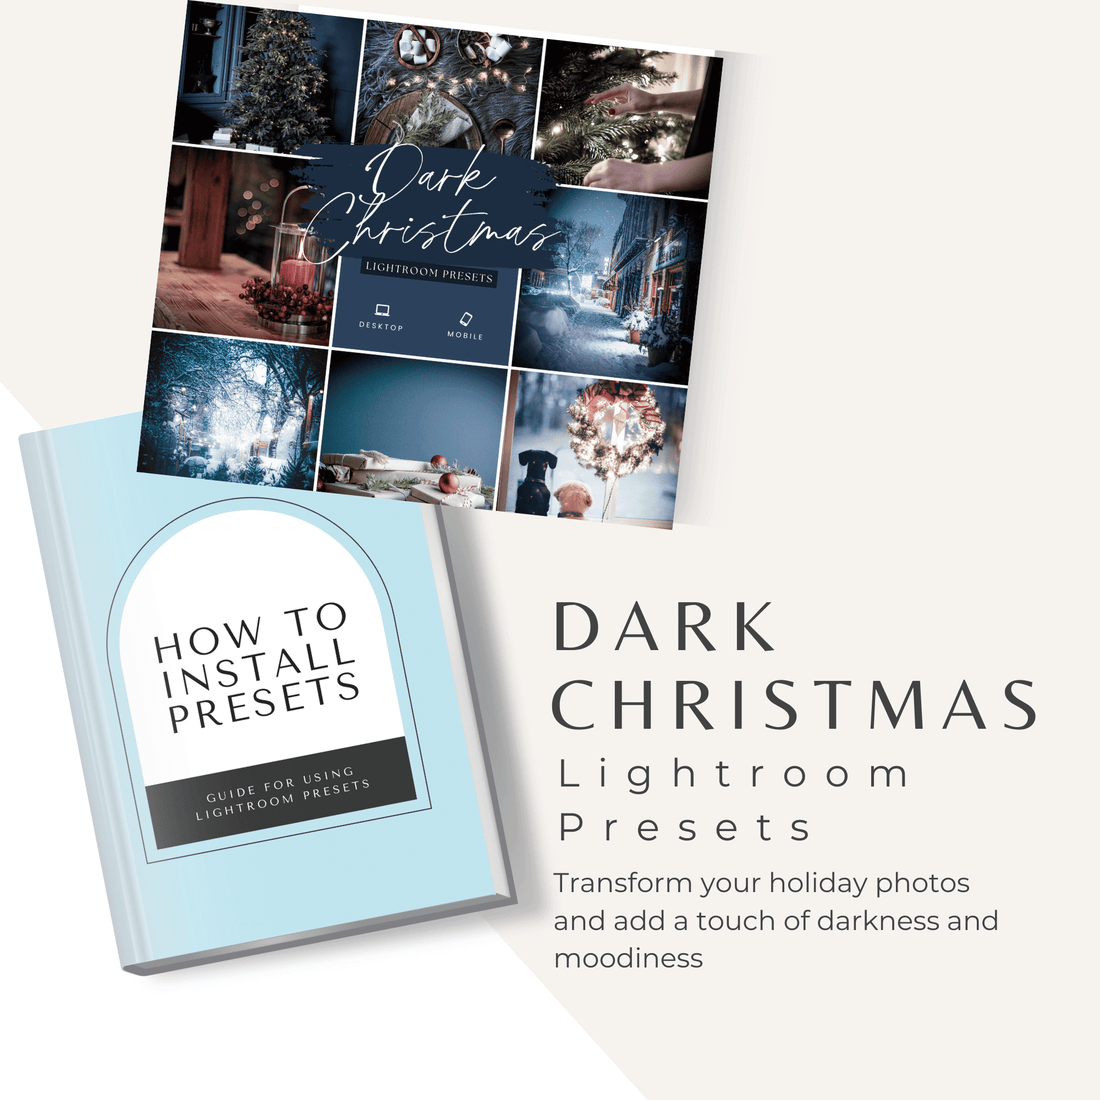 Dark Christmas Lightroom Presets